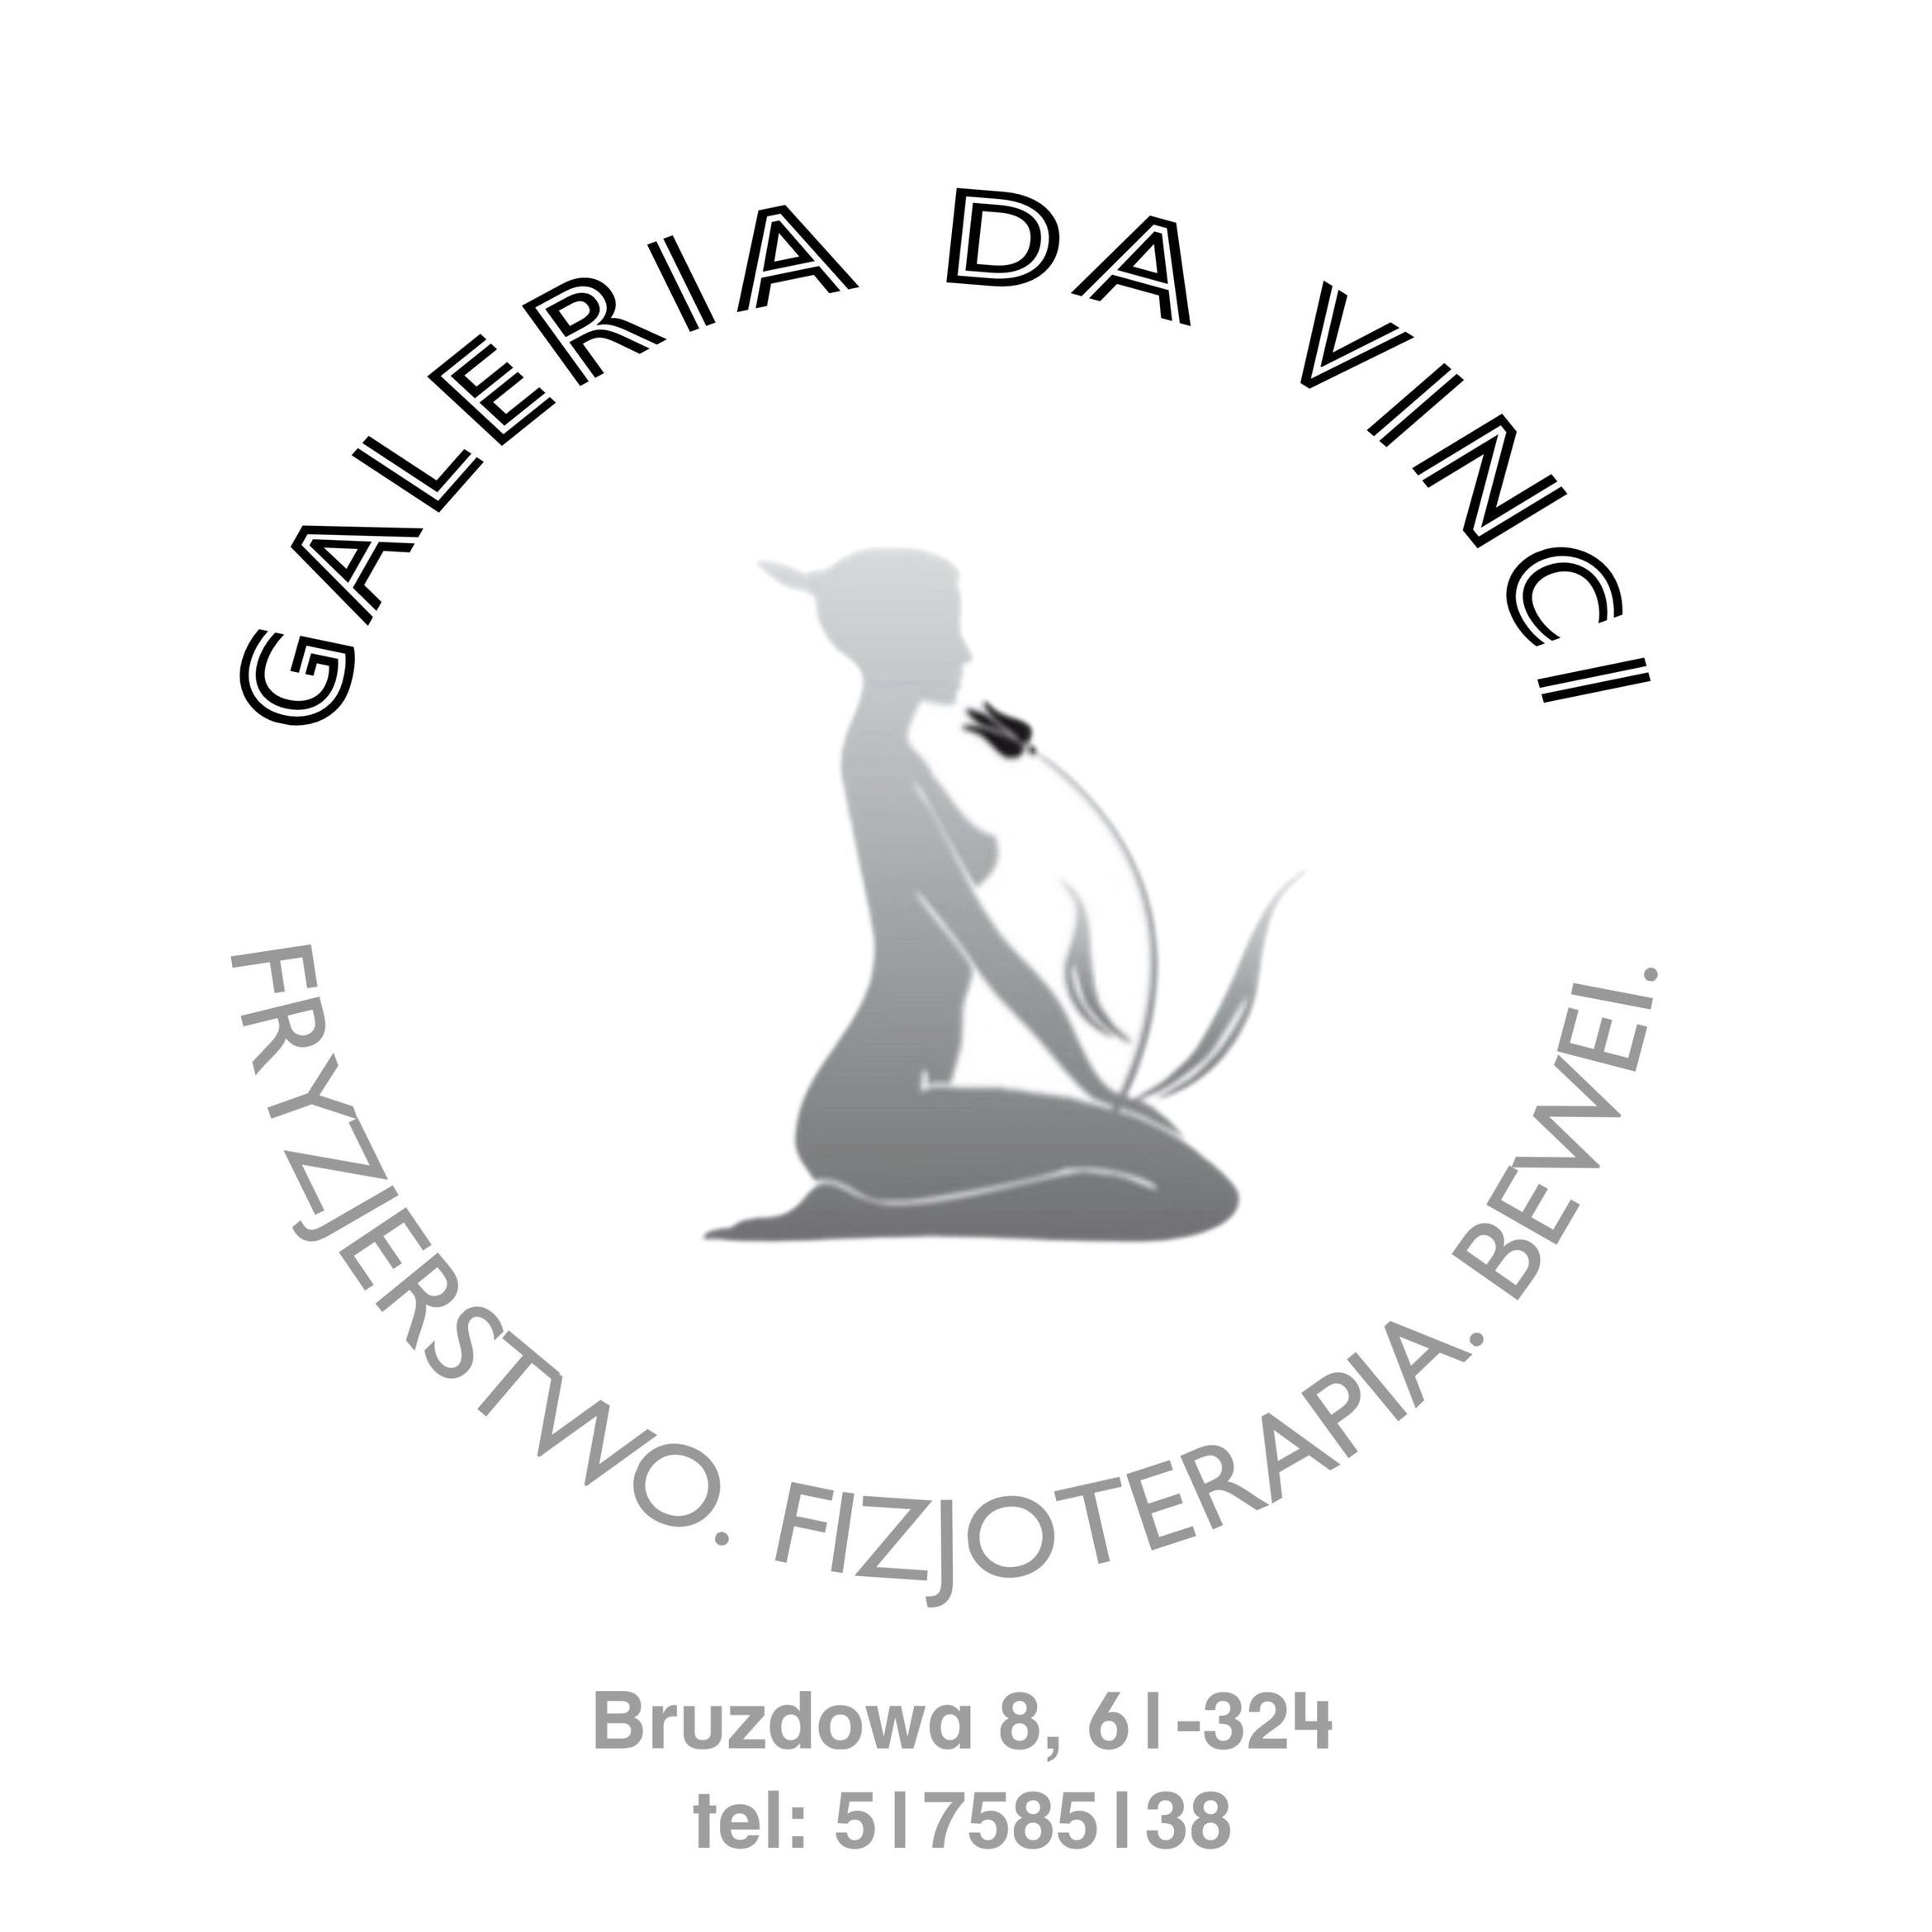 Galeria Da Vinci, ulica Bruzdowa 8, 61-324, Poznań, Nowe Miasto